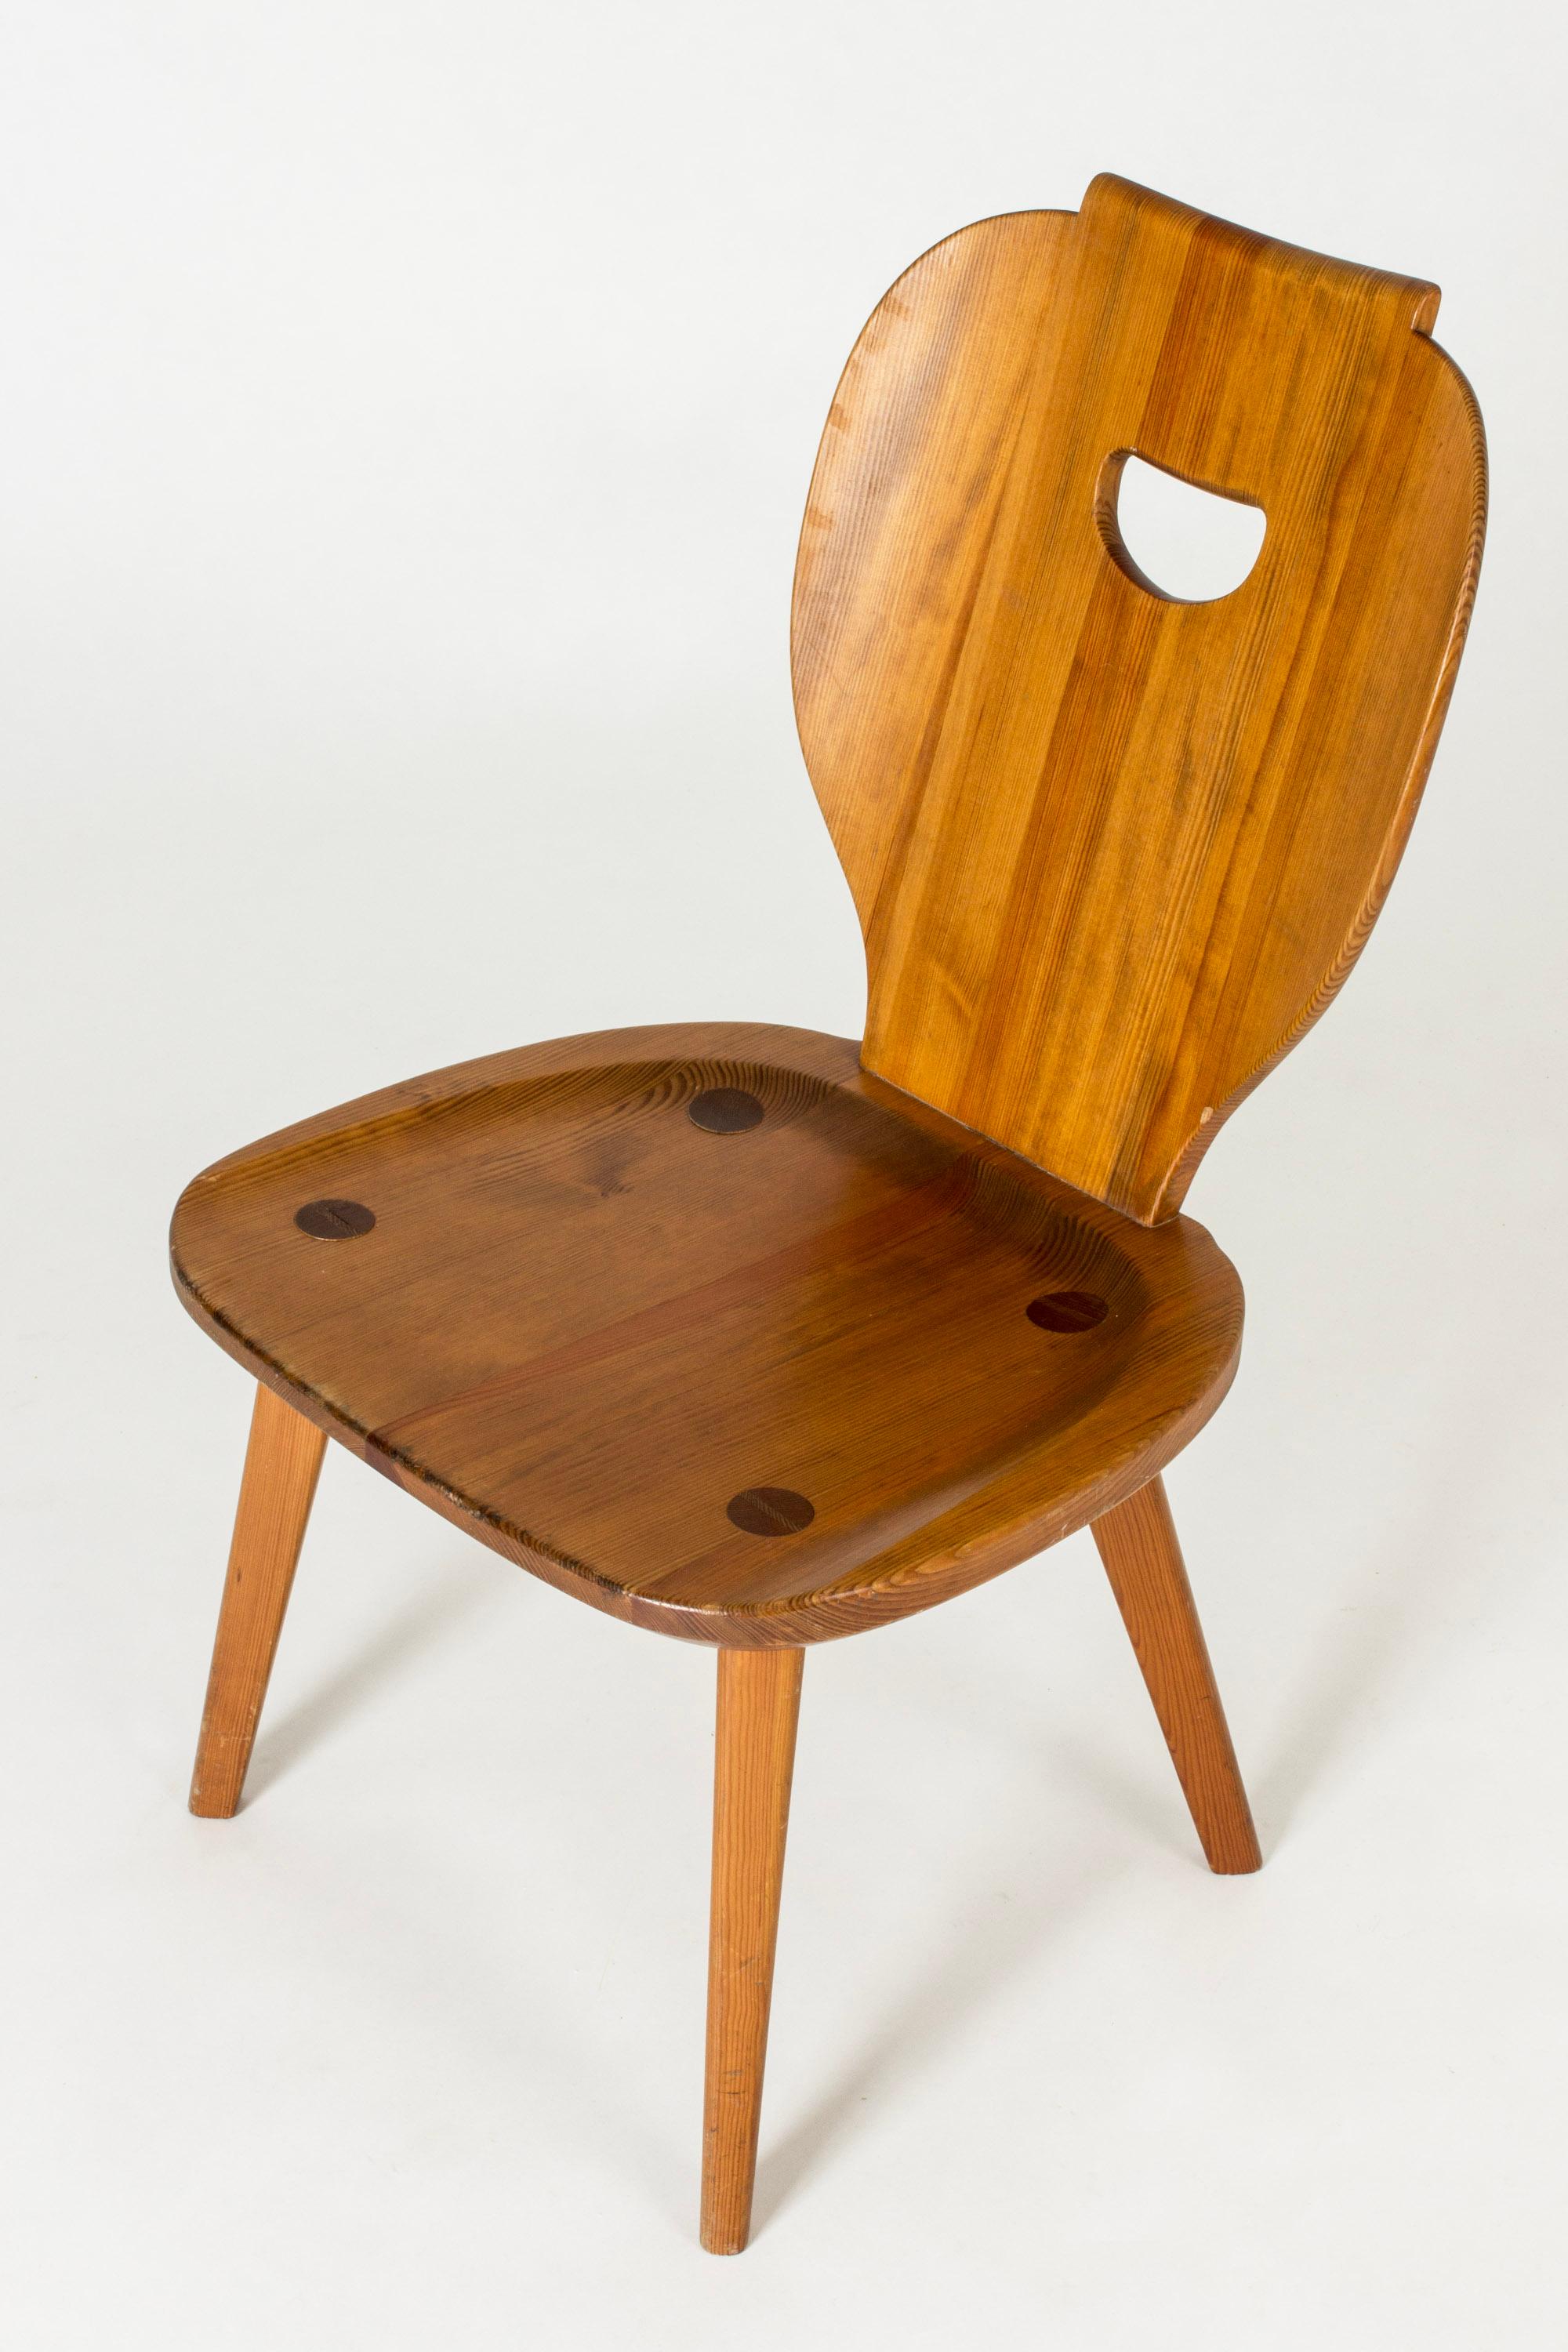 Midcentury Modern Pine Side Chair by Carl Malmsten, Svensk Fur, Sweden, 1940s For Sale 1